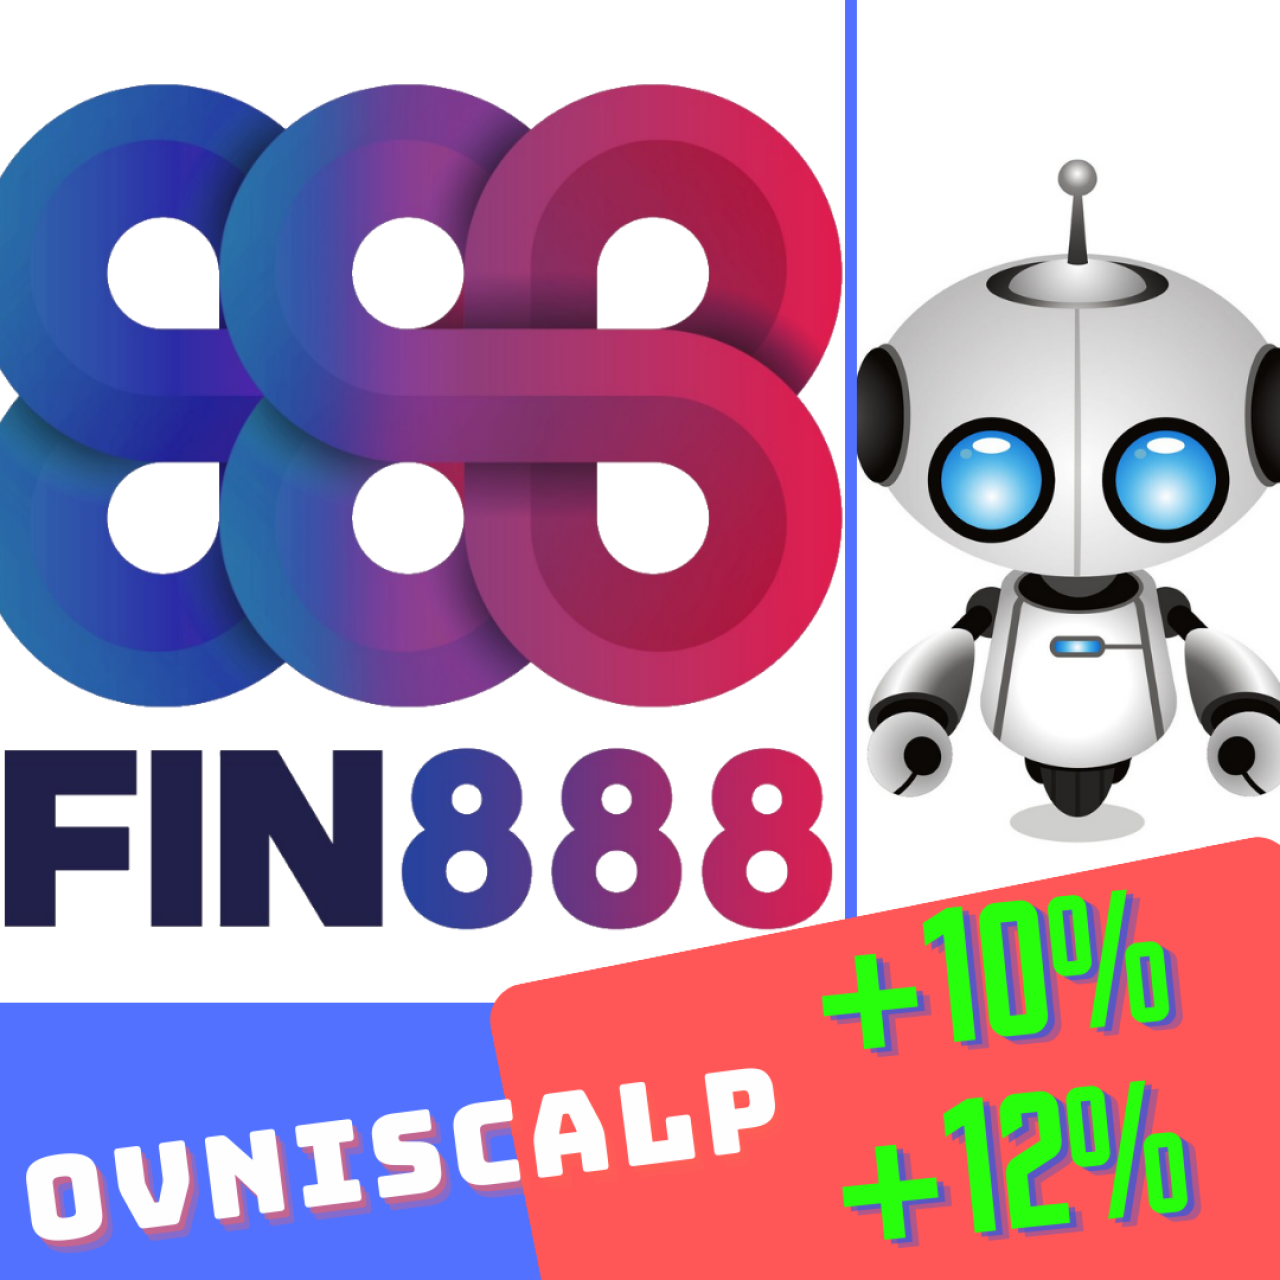 OvniScalp - Fin888